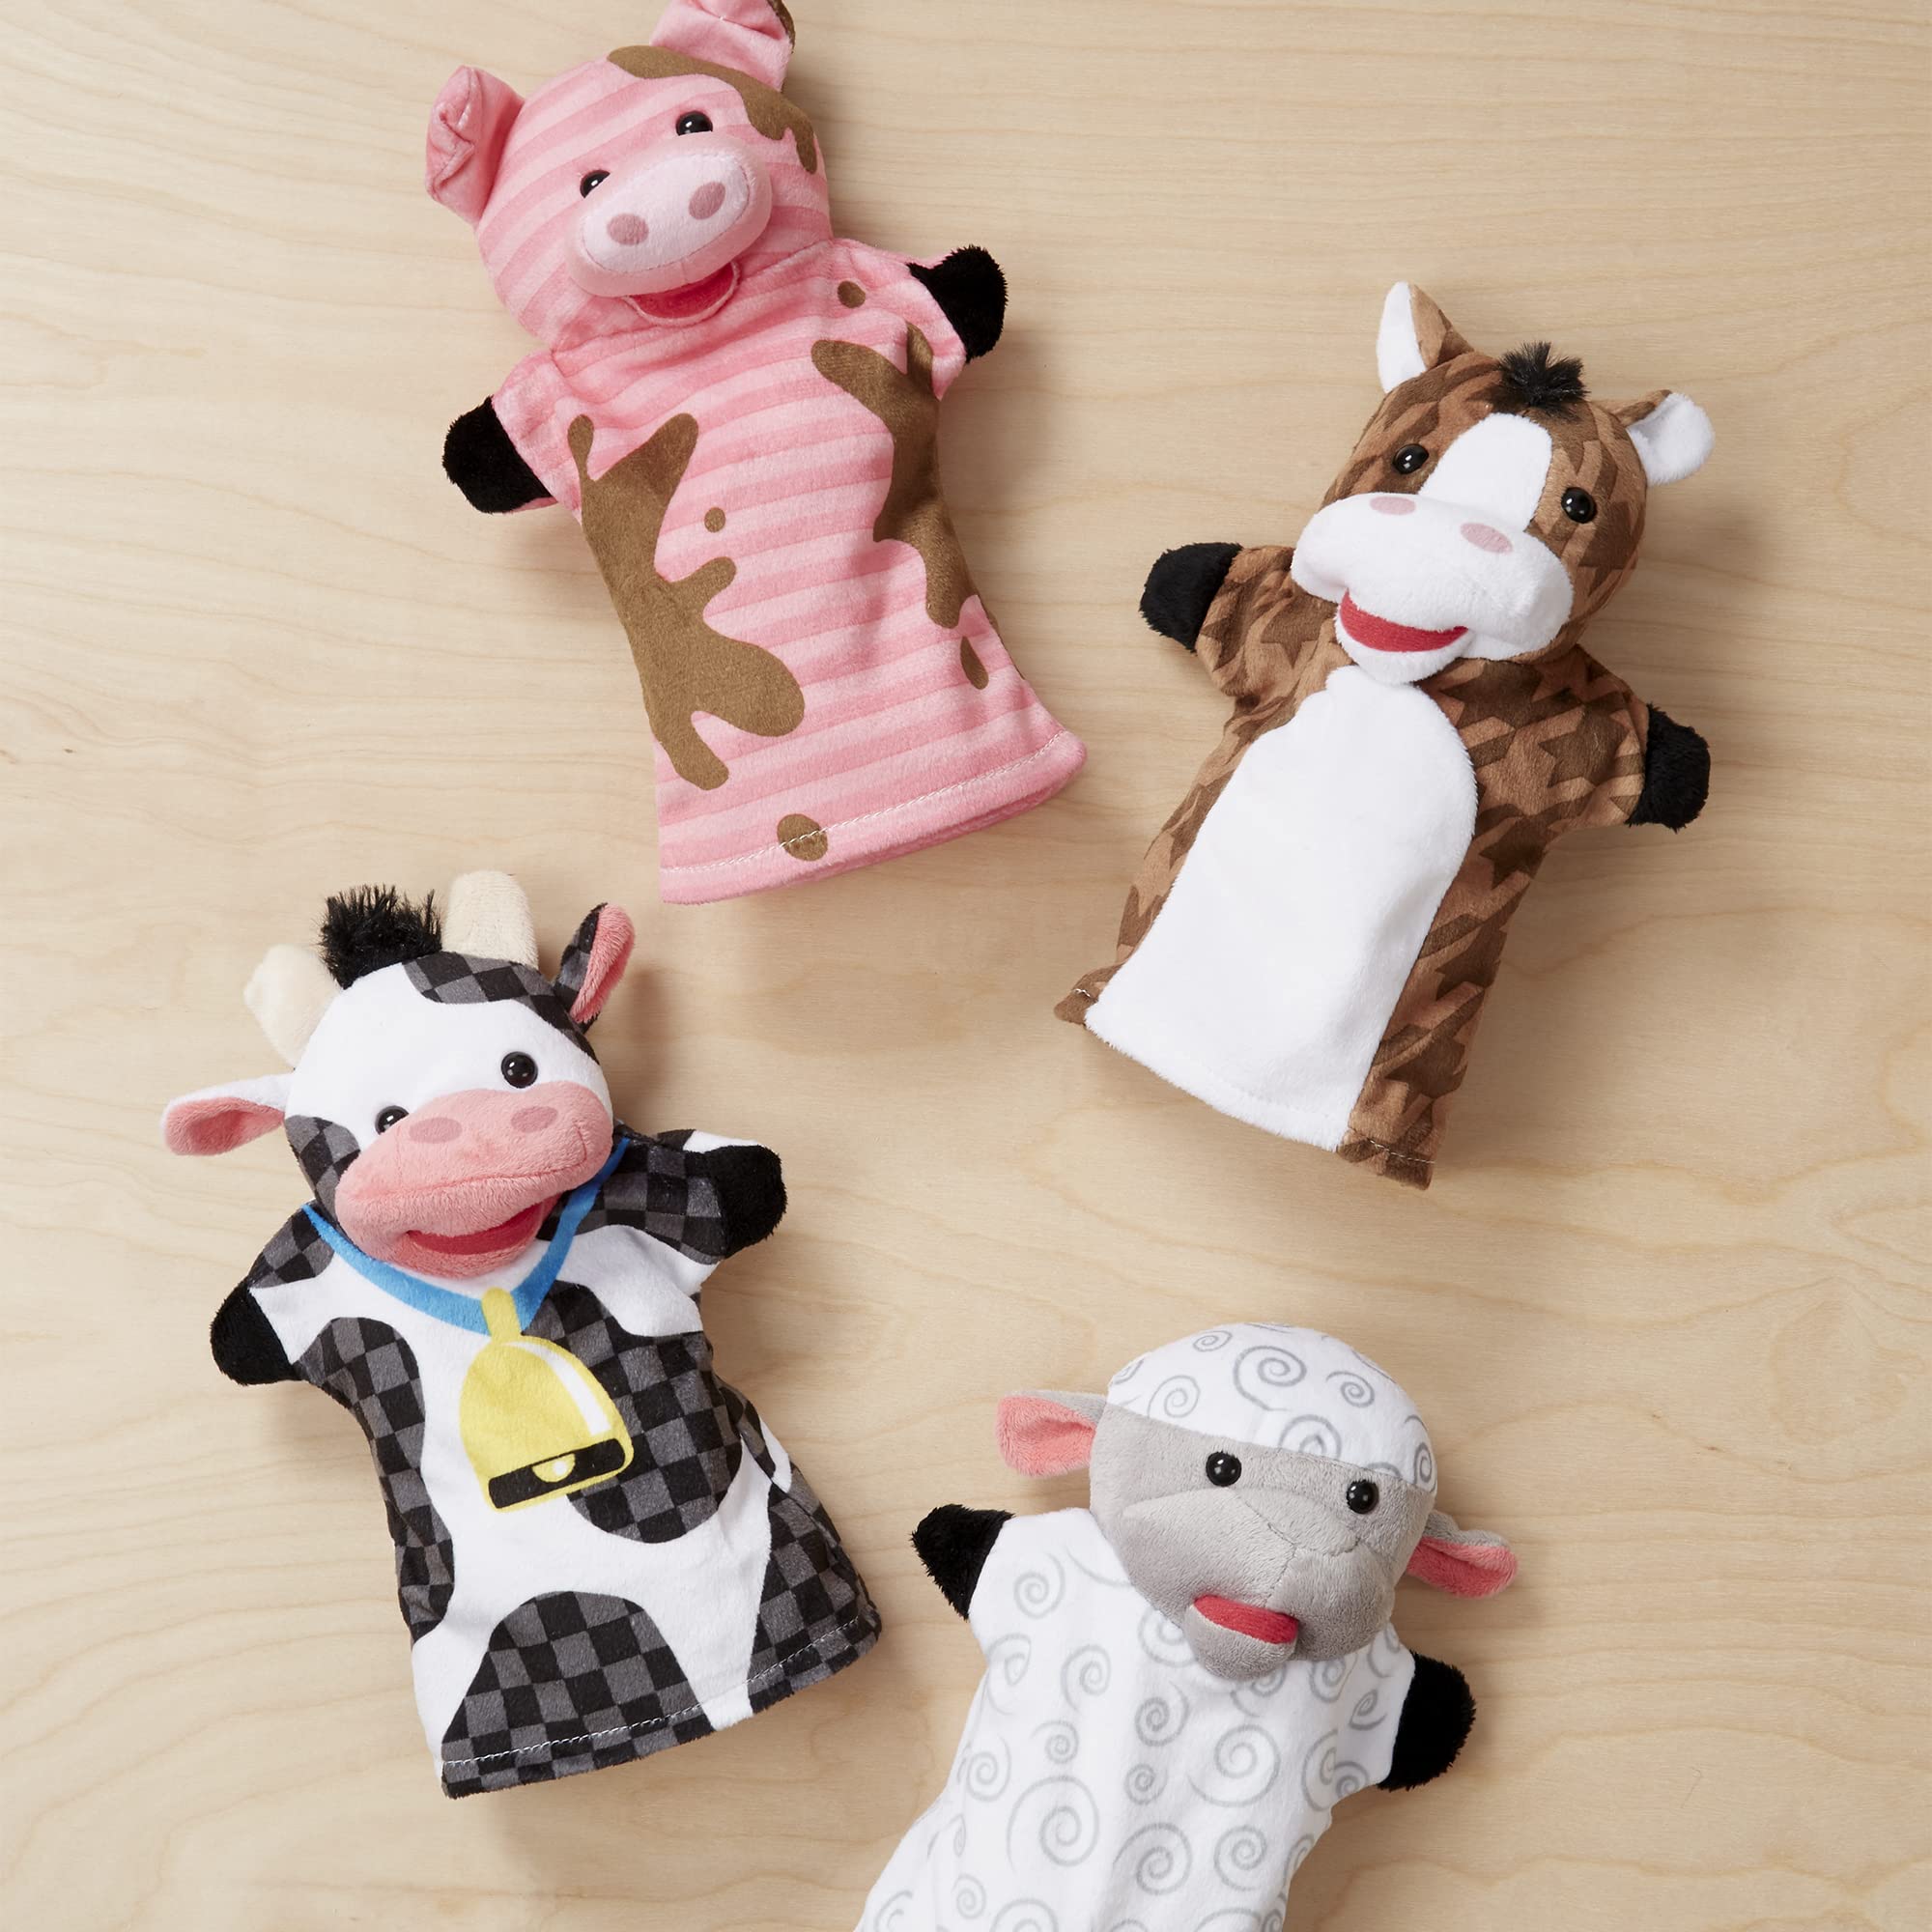 Melissa & Doug Farm Friends Hand Puppets (Set of 4) - Cow, Horse, Sheep, and Pig, Farm, 1 EA